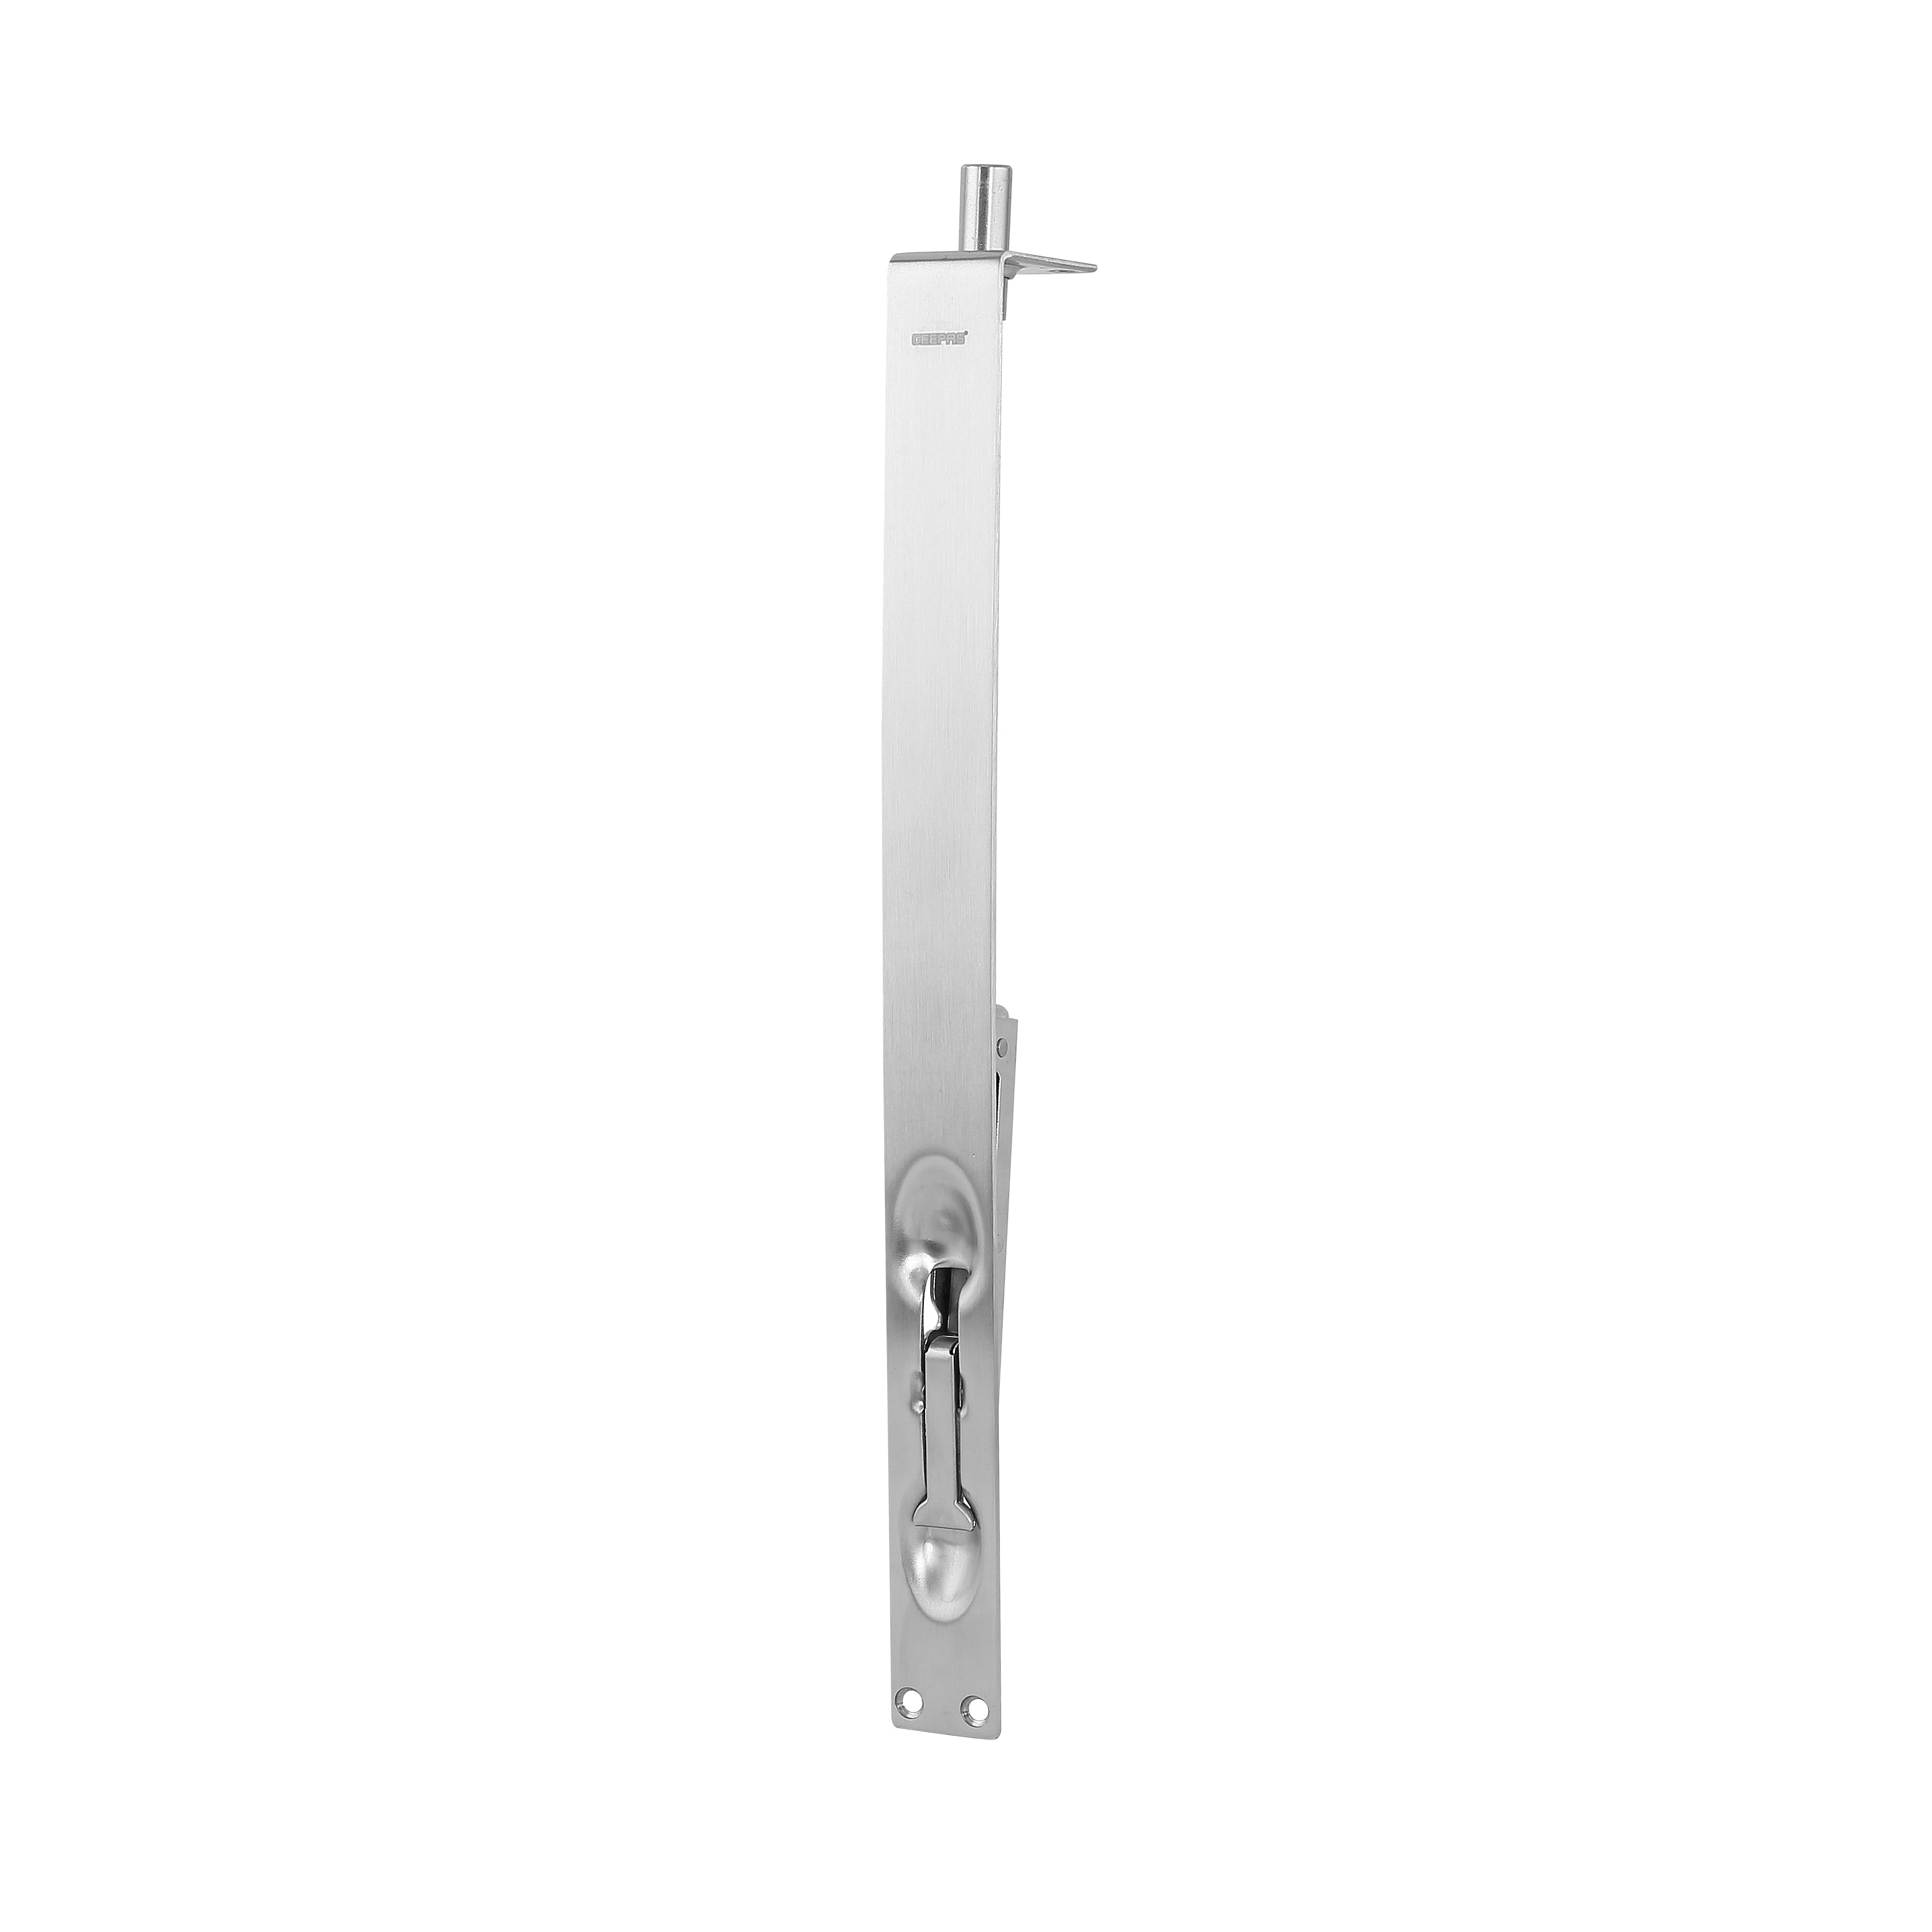 Geepas Flush Tower Bolt 300Mm - Stainless Steel Push Button Door Flush Bolt Latch Catch | Ideal For All Types Of Wooden &amp; Metal Doors